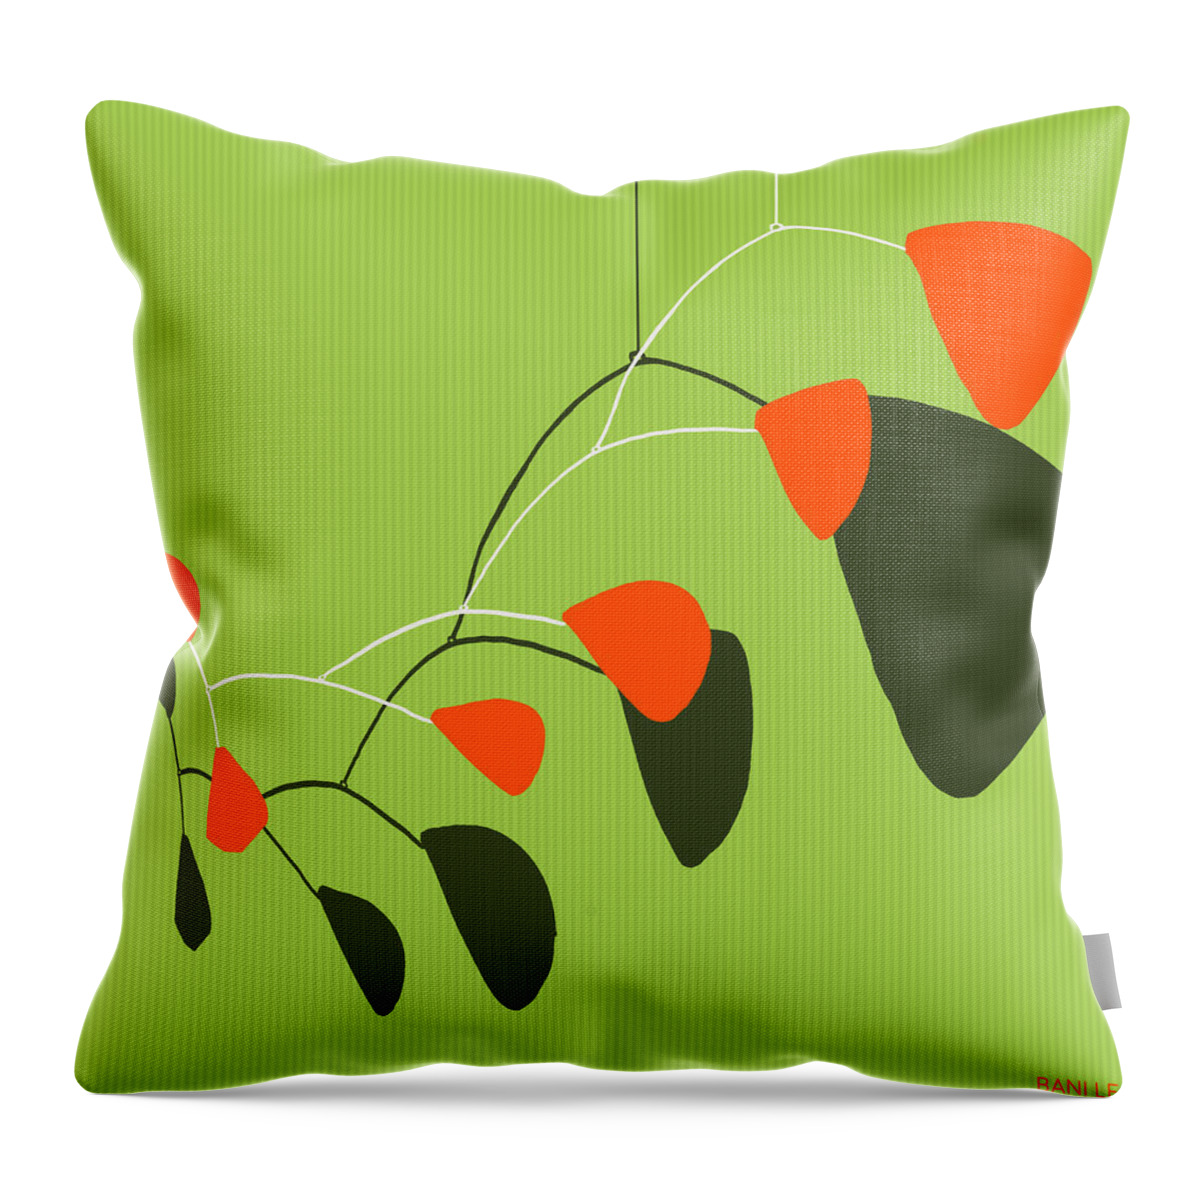 Minimalist Throw Pillow featuring the digital art Minimalist Modern Mobile by Little Bunny Sunshine